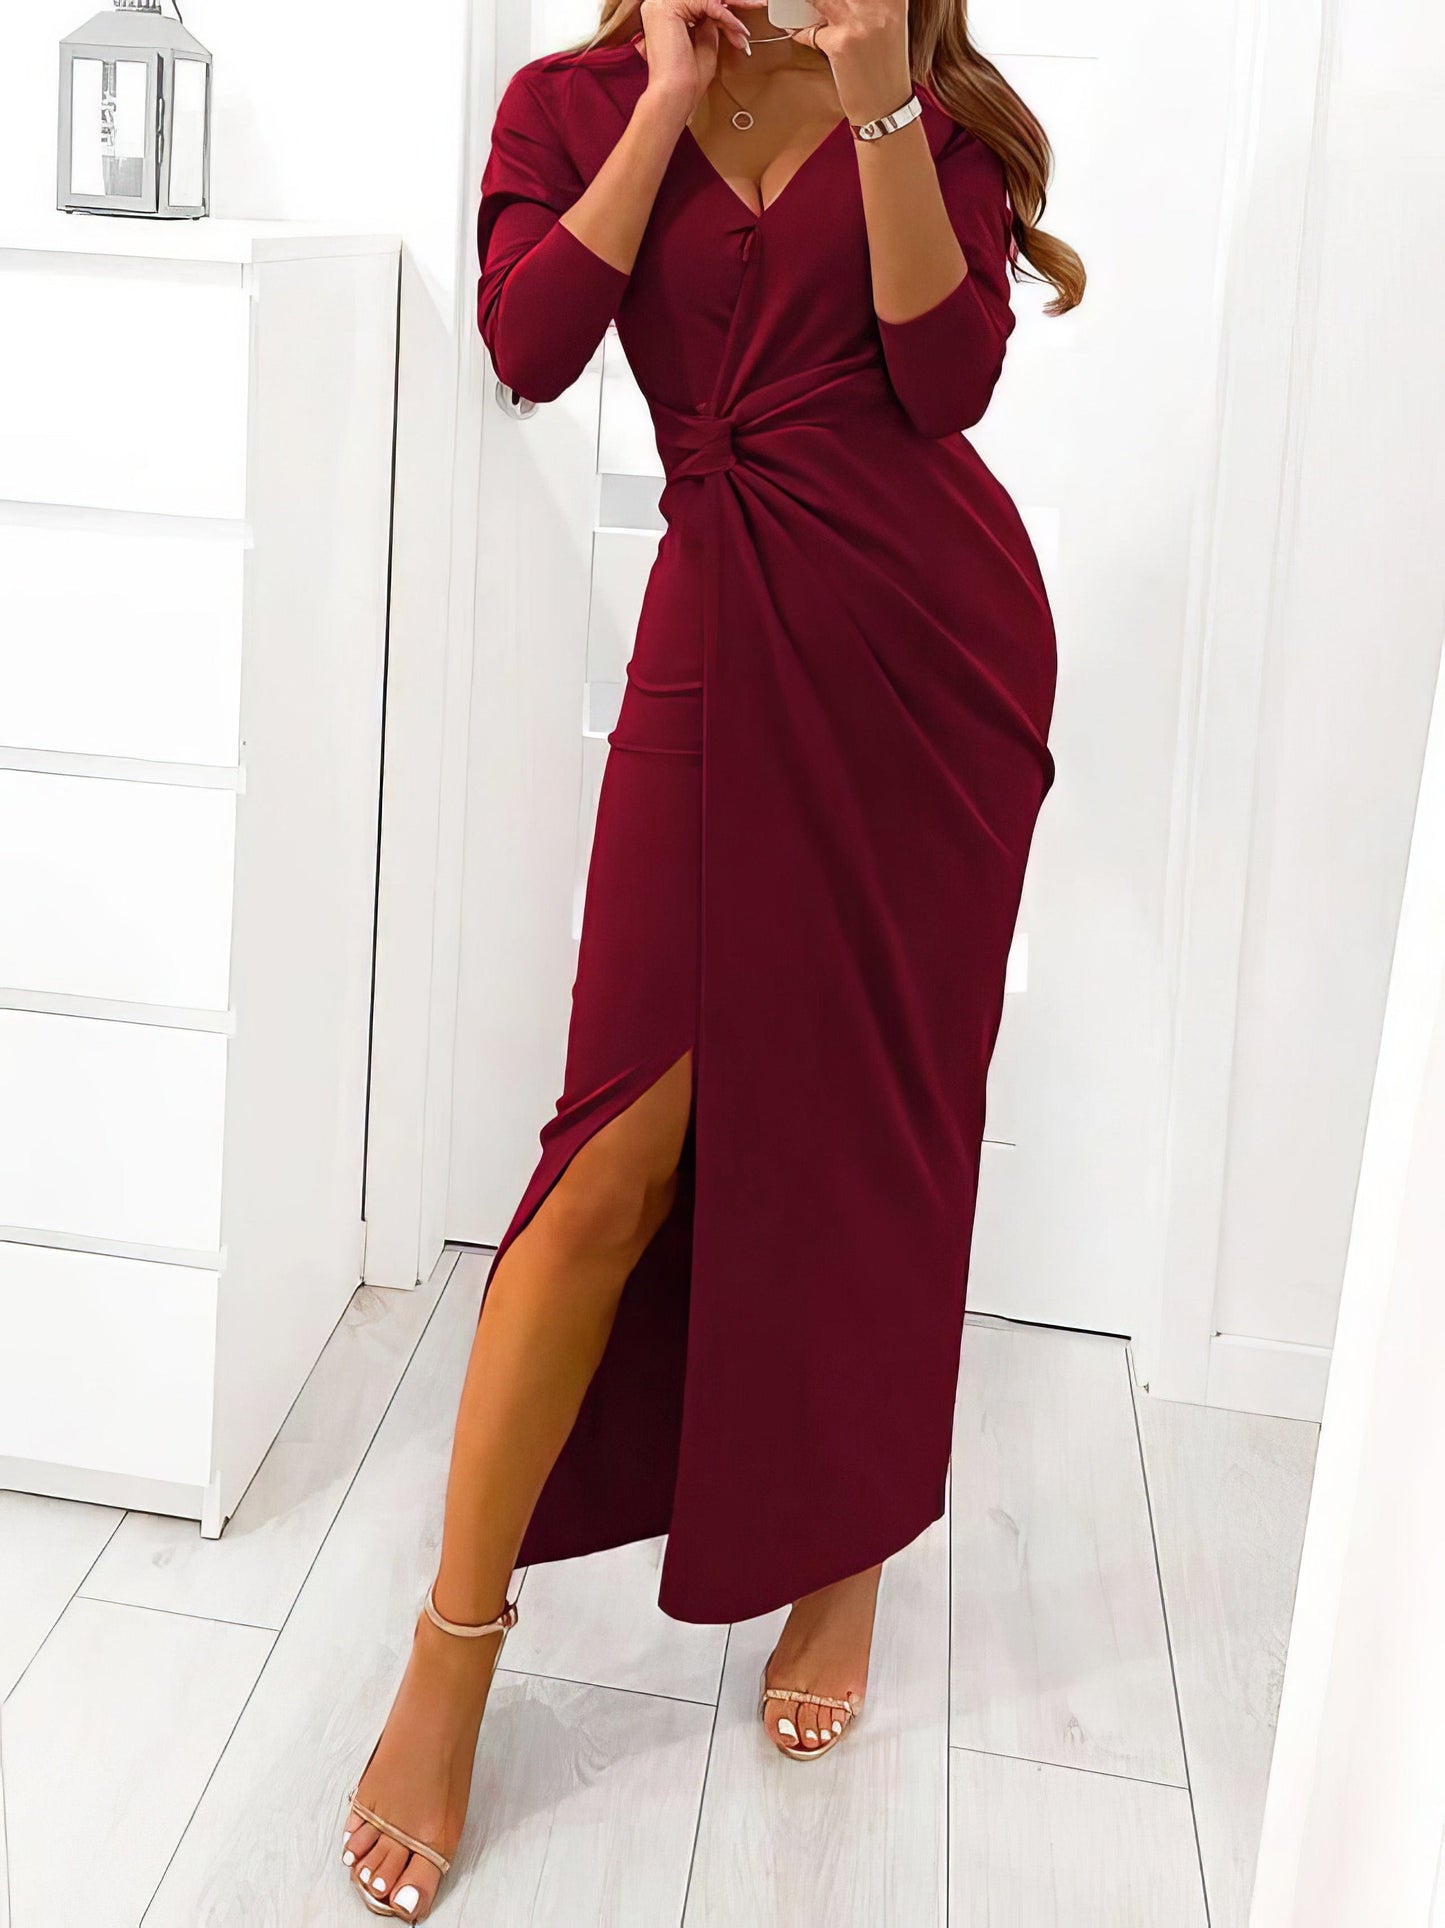 MsDressly Maxi Dresses V-Neck Long Sleeve Split Evening Dress